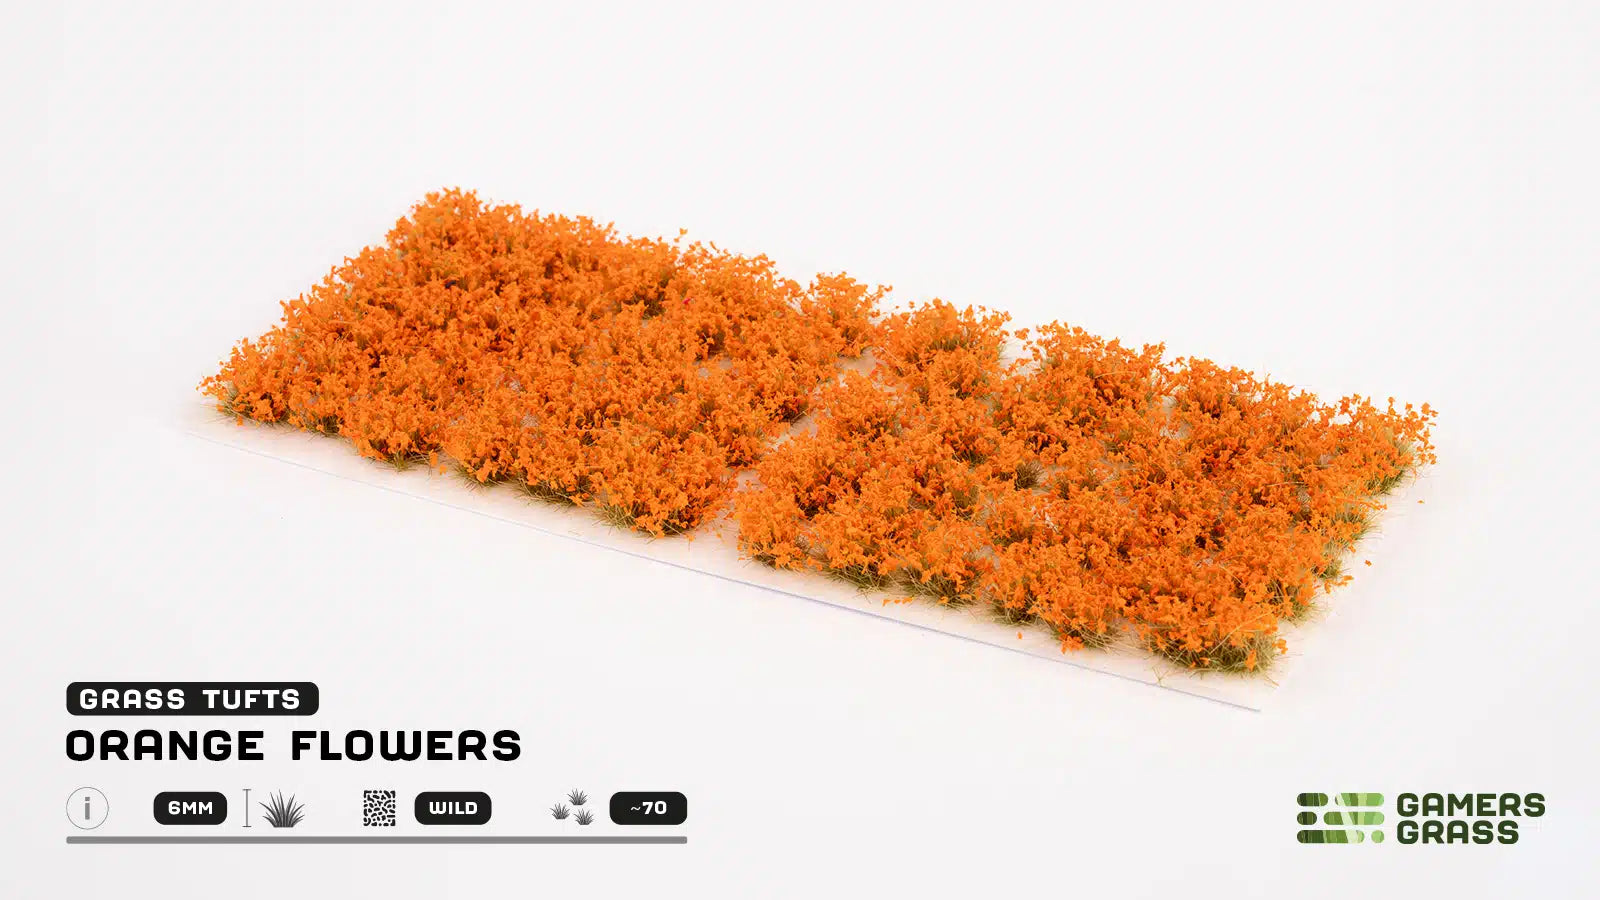 GamersGrass Grass Tufts: Orange Flowers Set 4-6mm - Wild | Gauntlet Hobbies - Angola